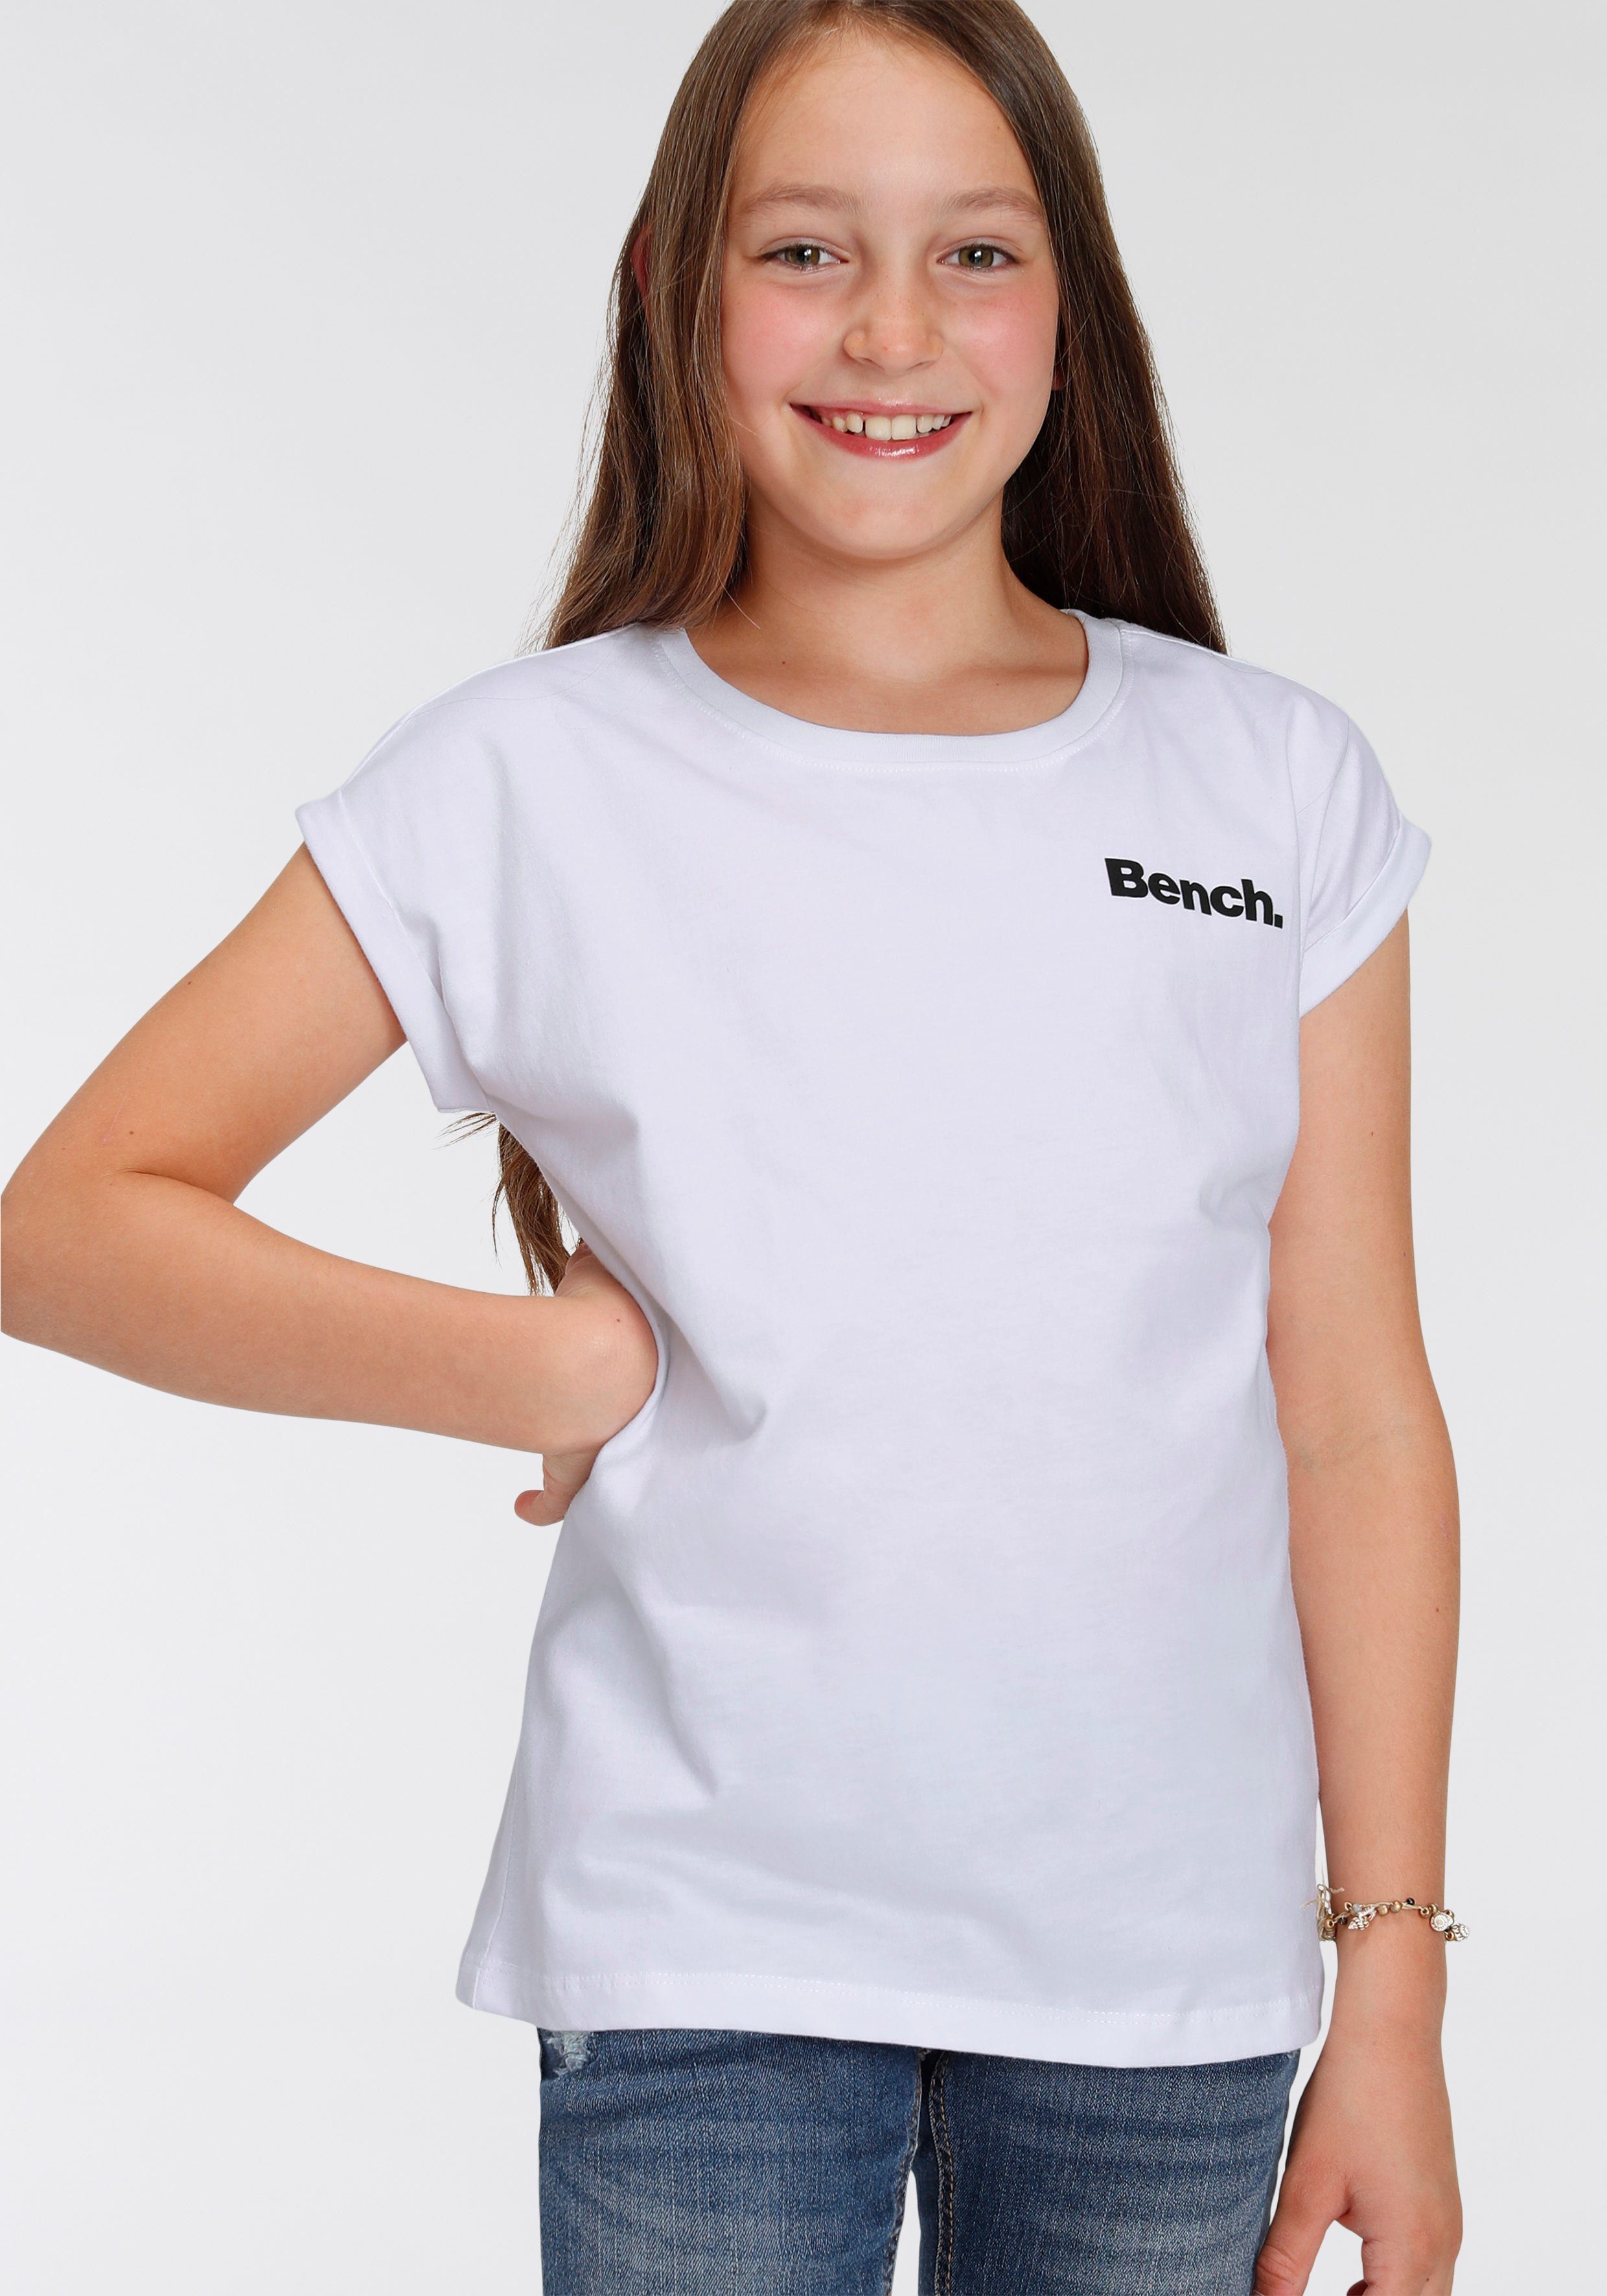 Logo T-Shirt mit Bench. Rückendruck